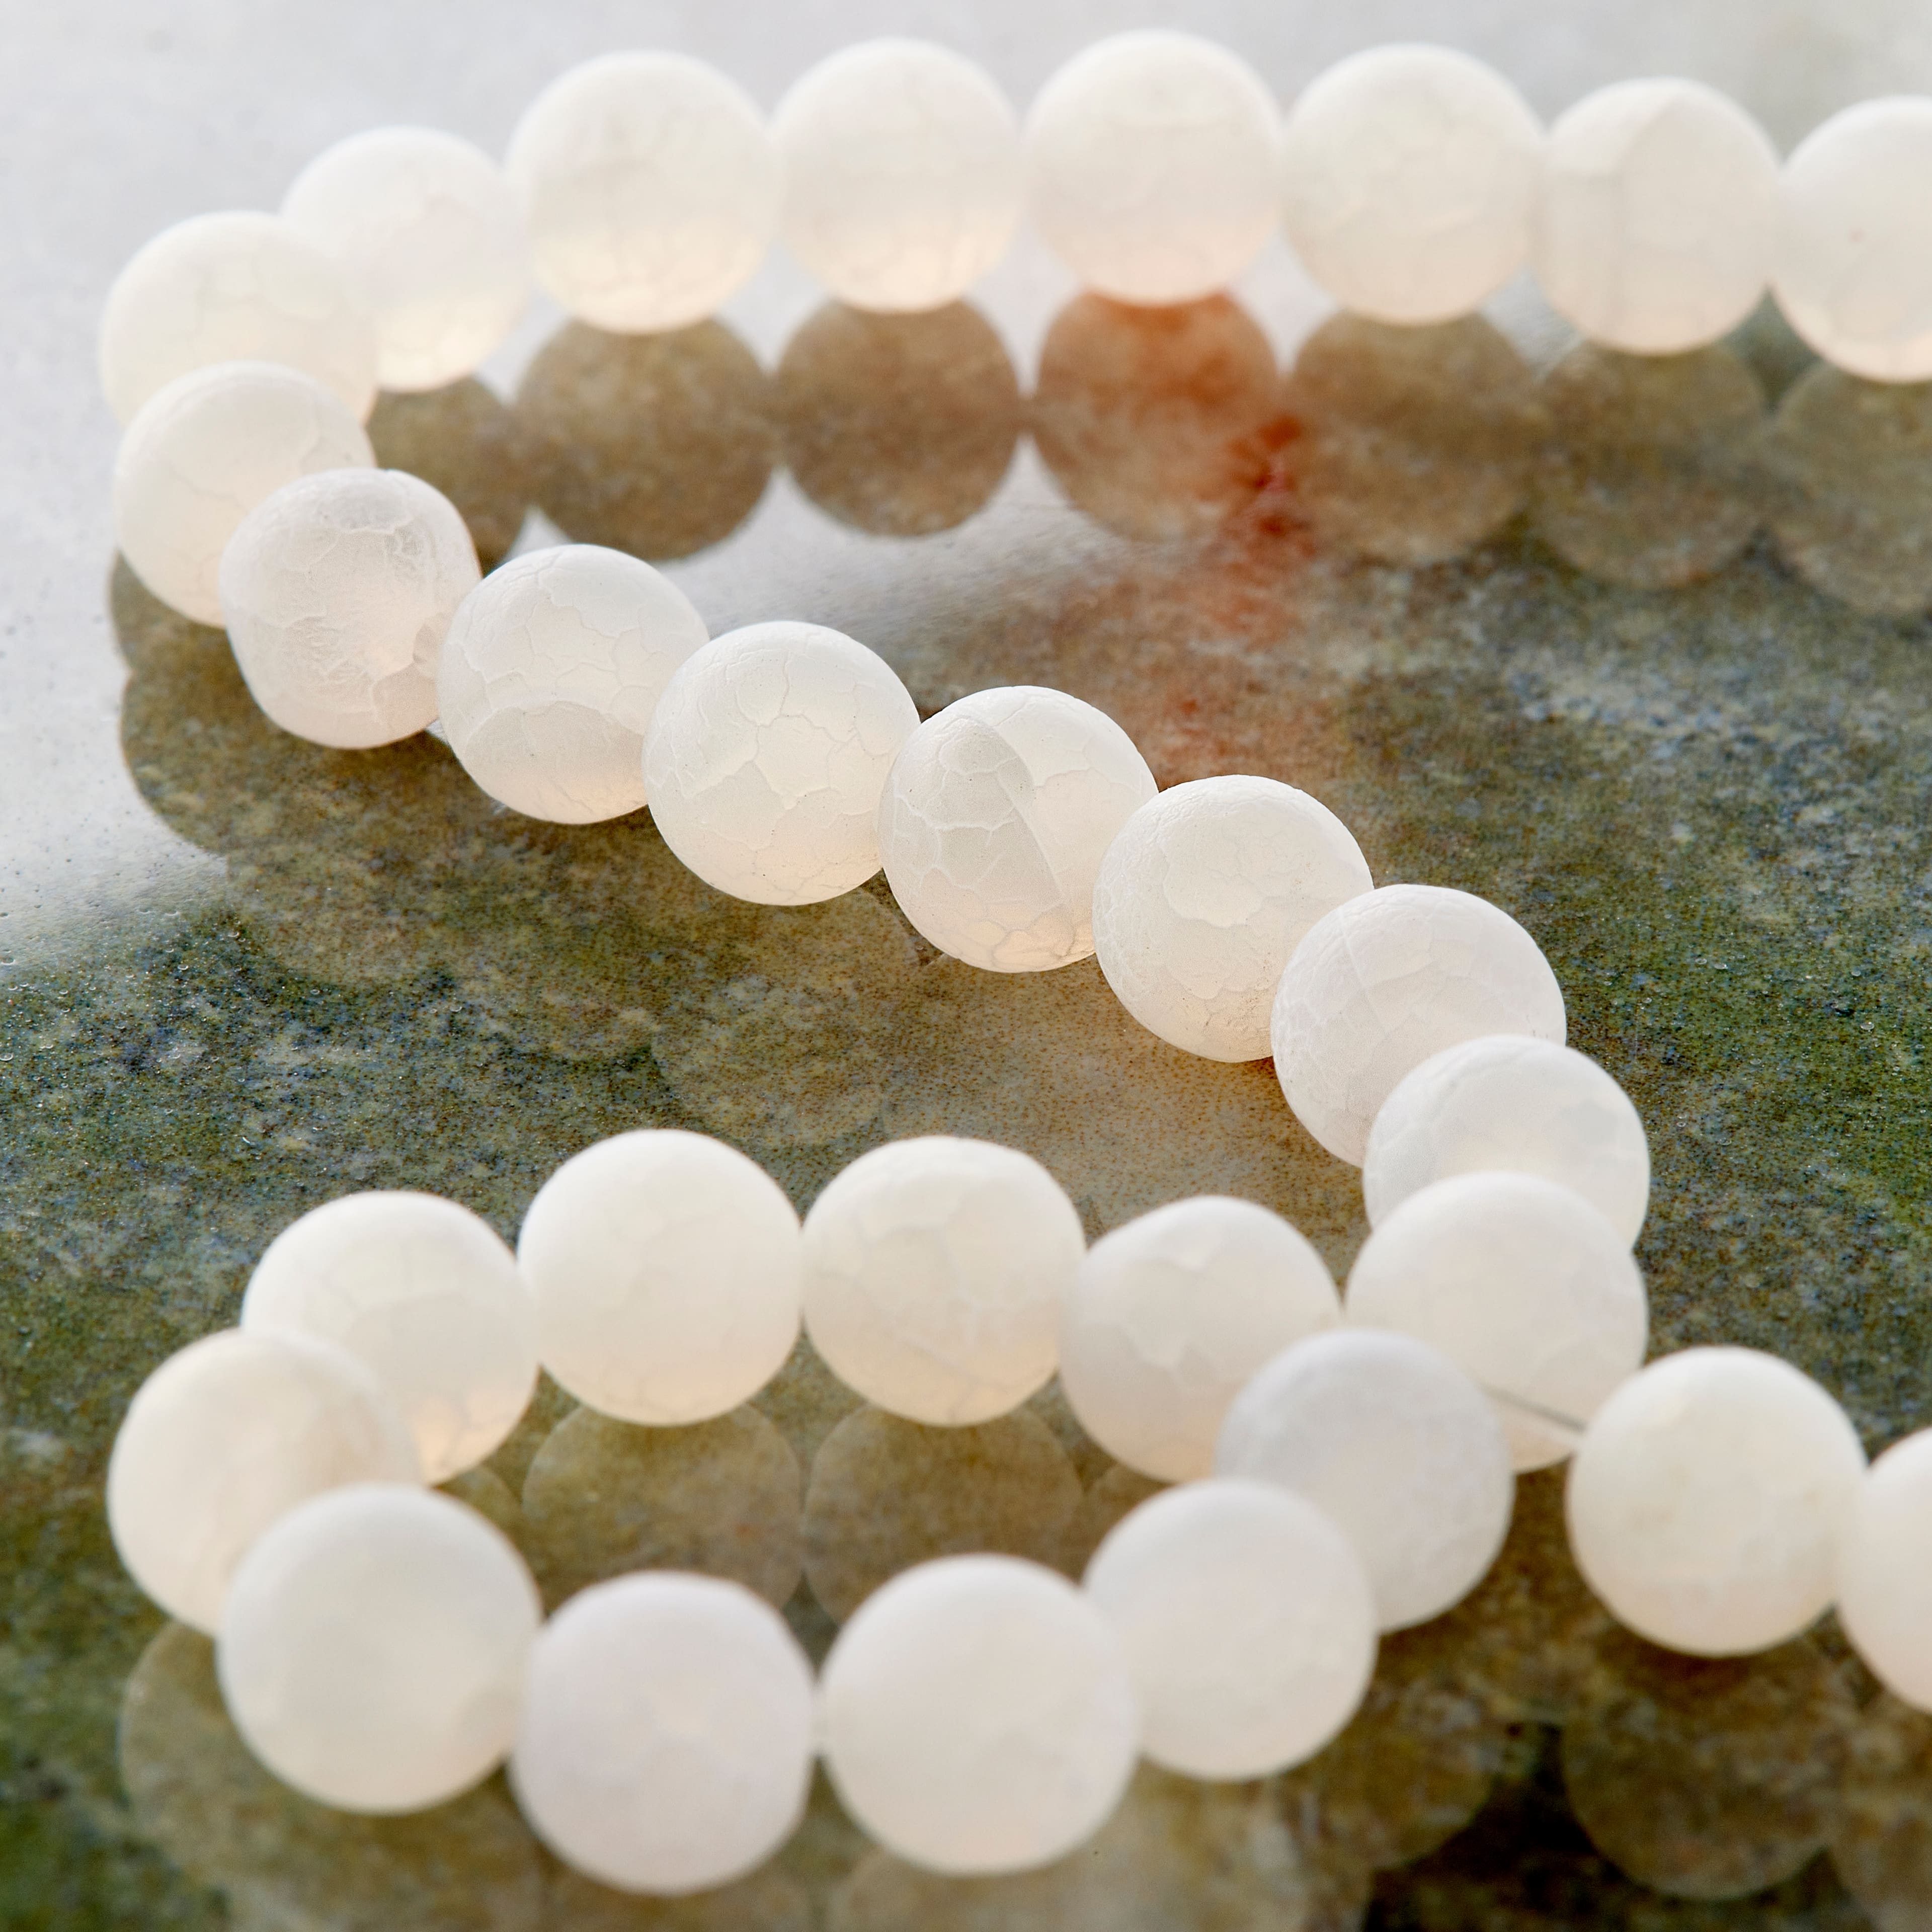 Mint Jade Round Beads, 8mm by Bead Landing™